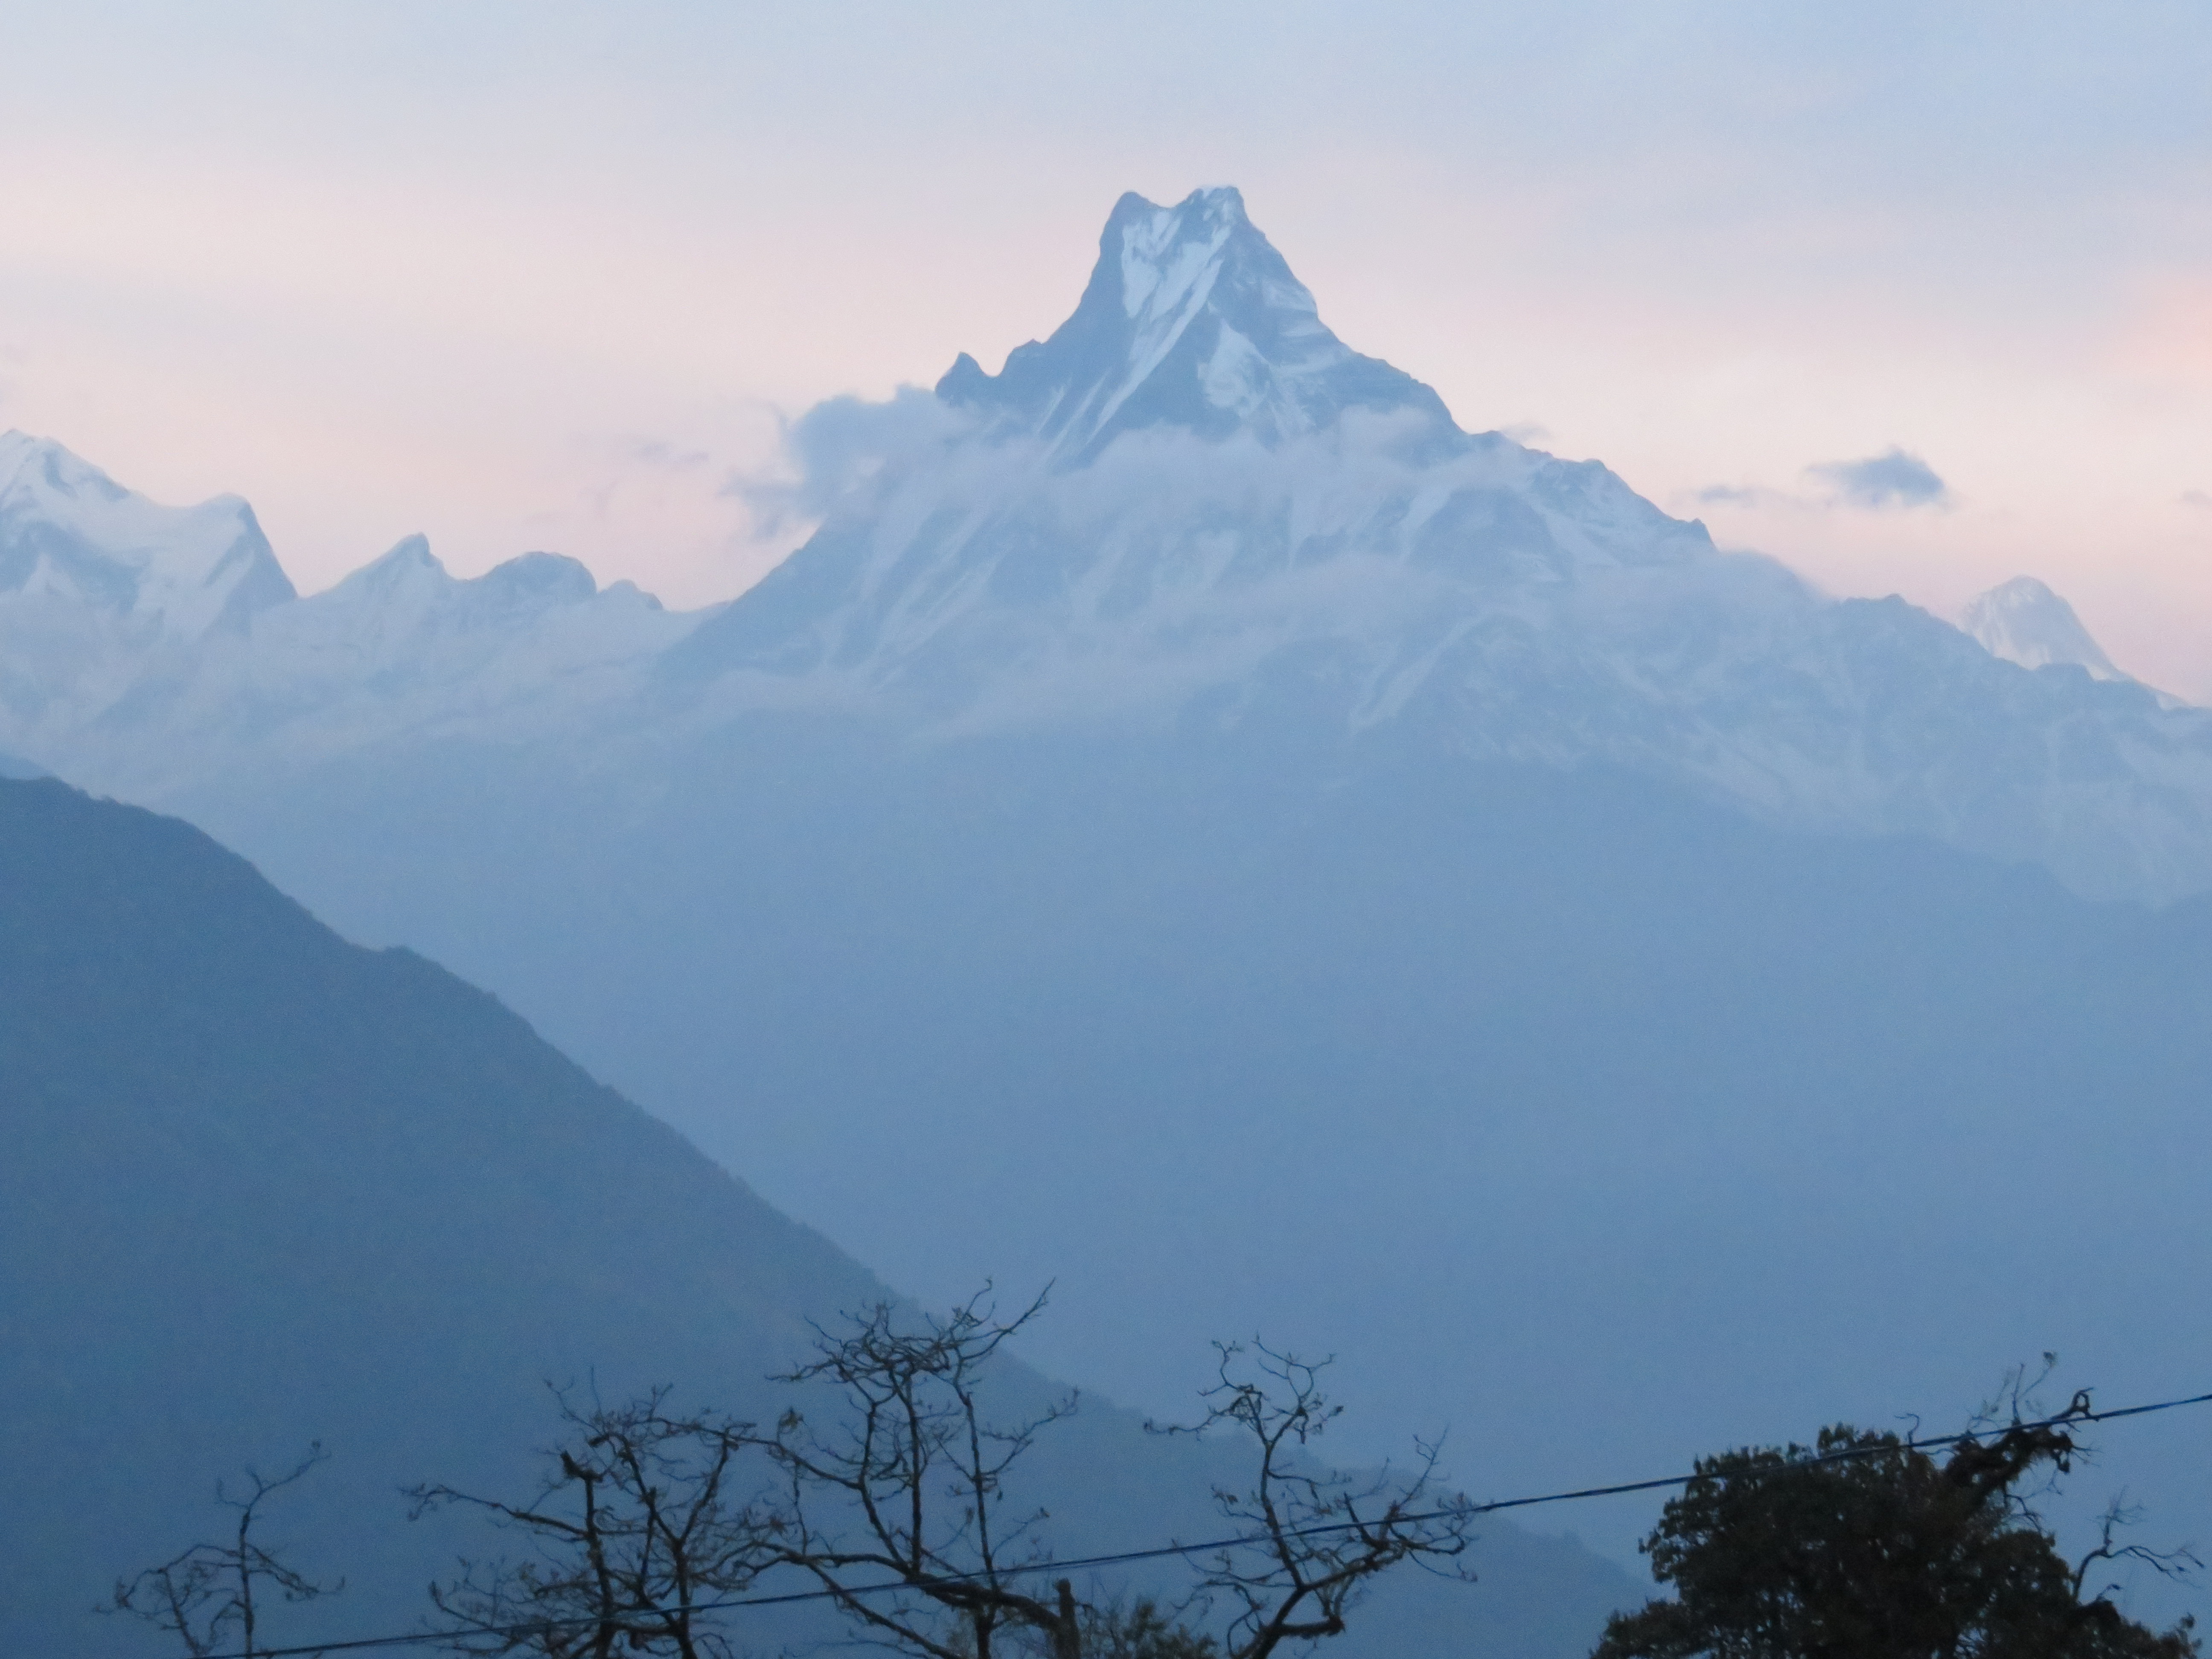 Tips for the Annapurna Base Camp Trek